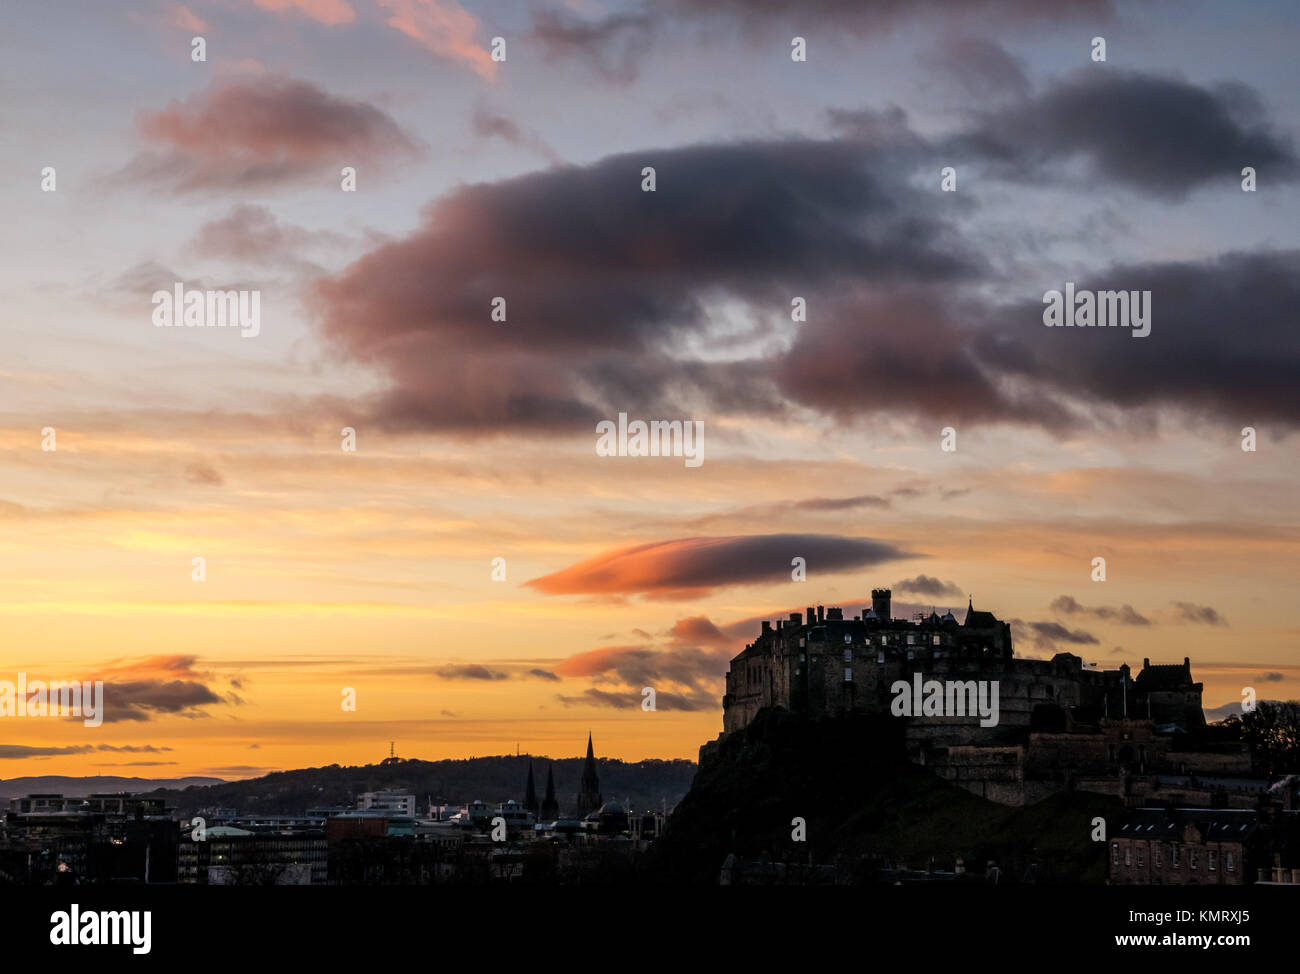 Colourful sunset over skyline with Edinburgh Castle rock outcrop  silhouette against orange sky at dusk, Edinburgh, Scotland, UK Stock Photo